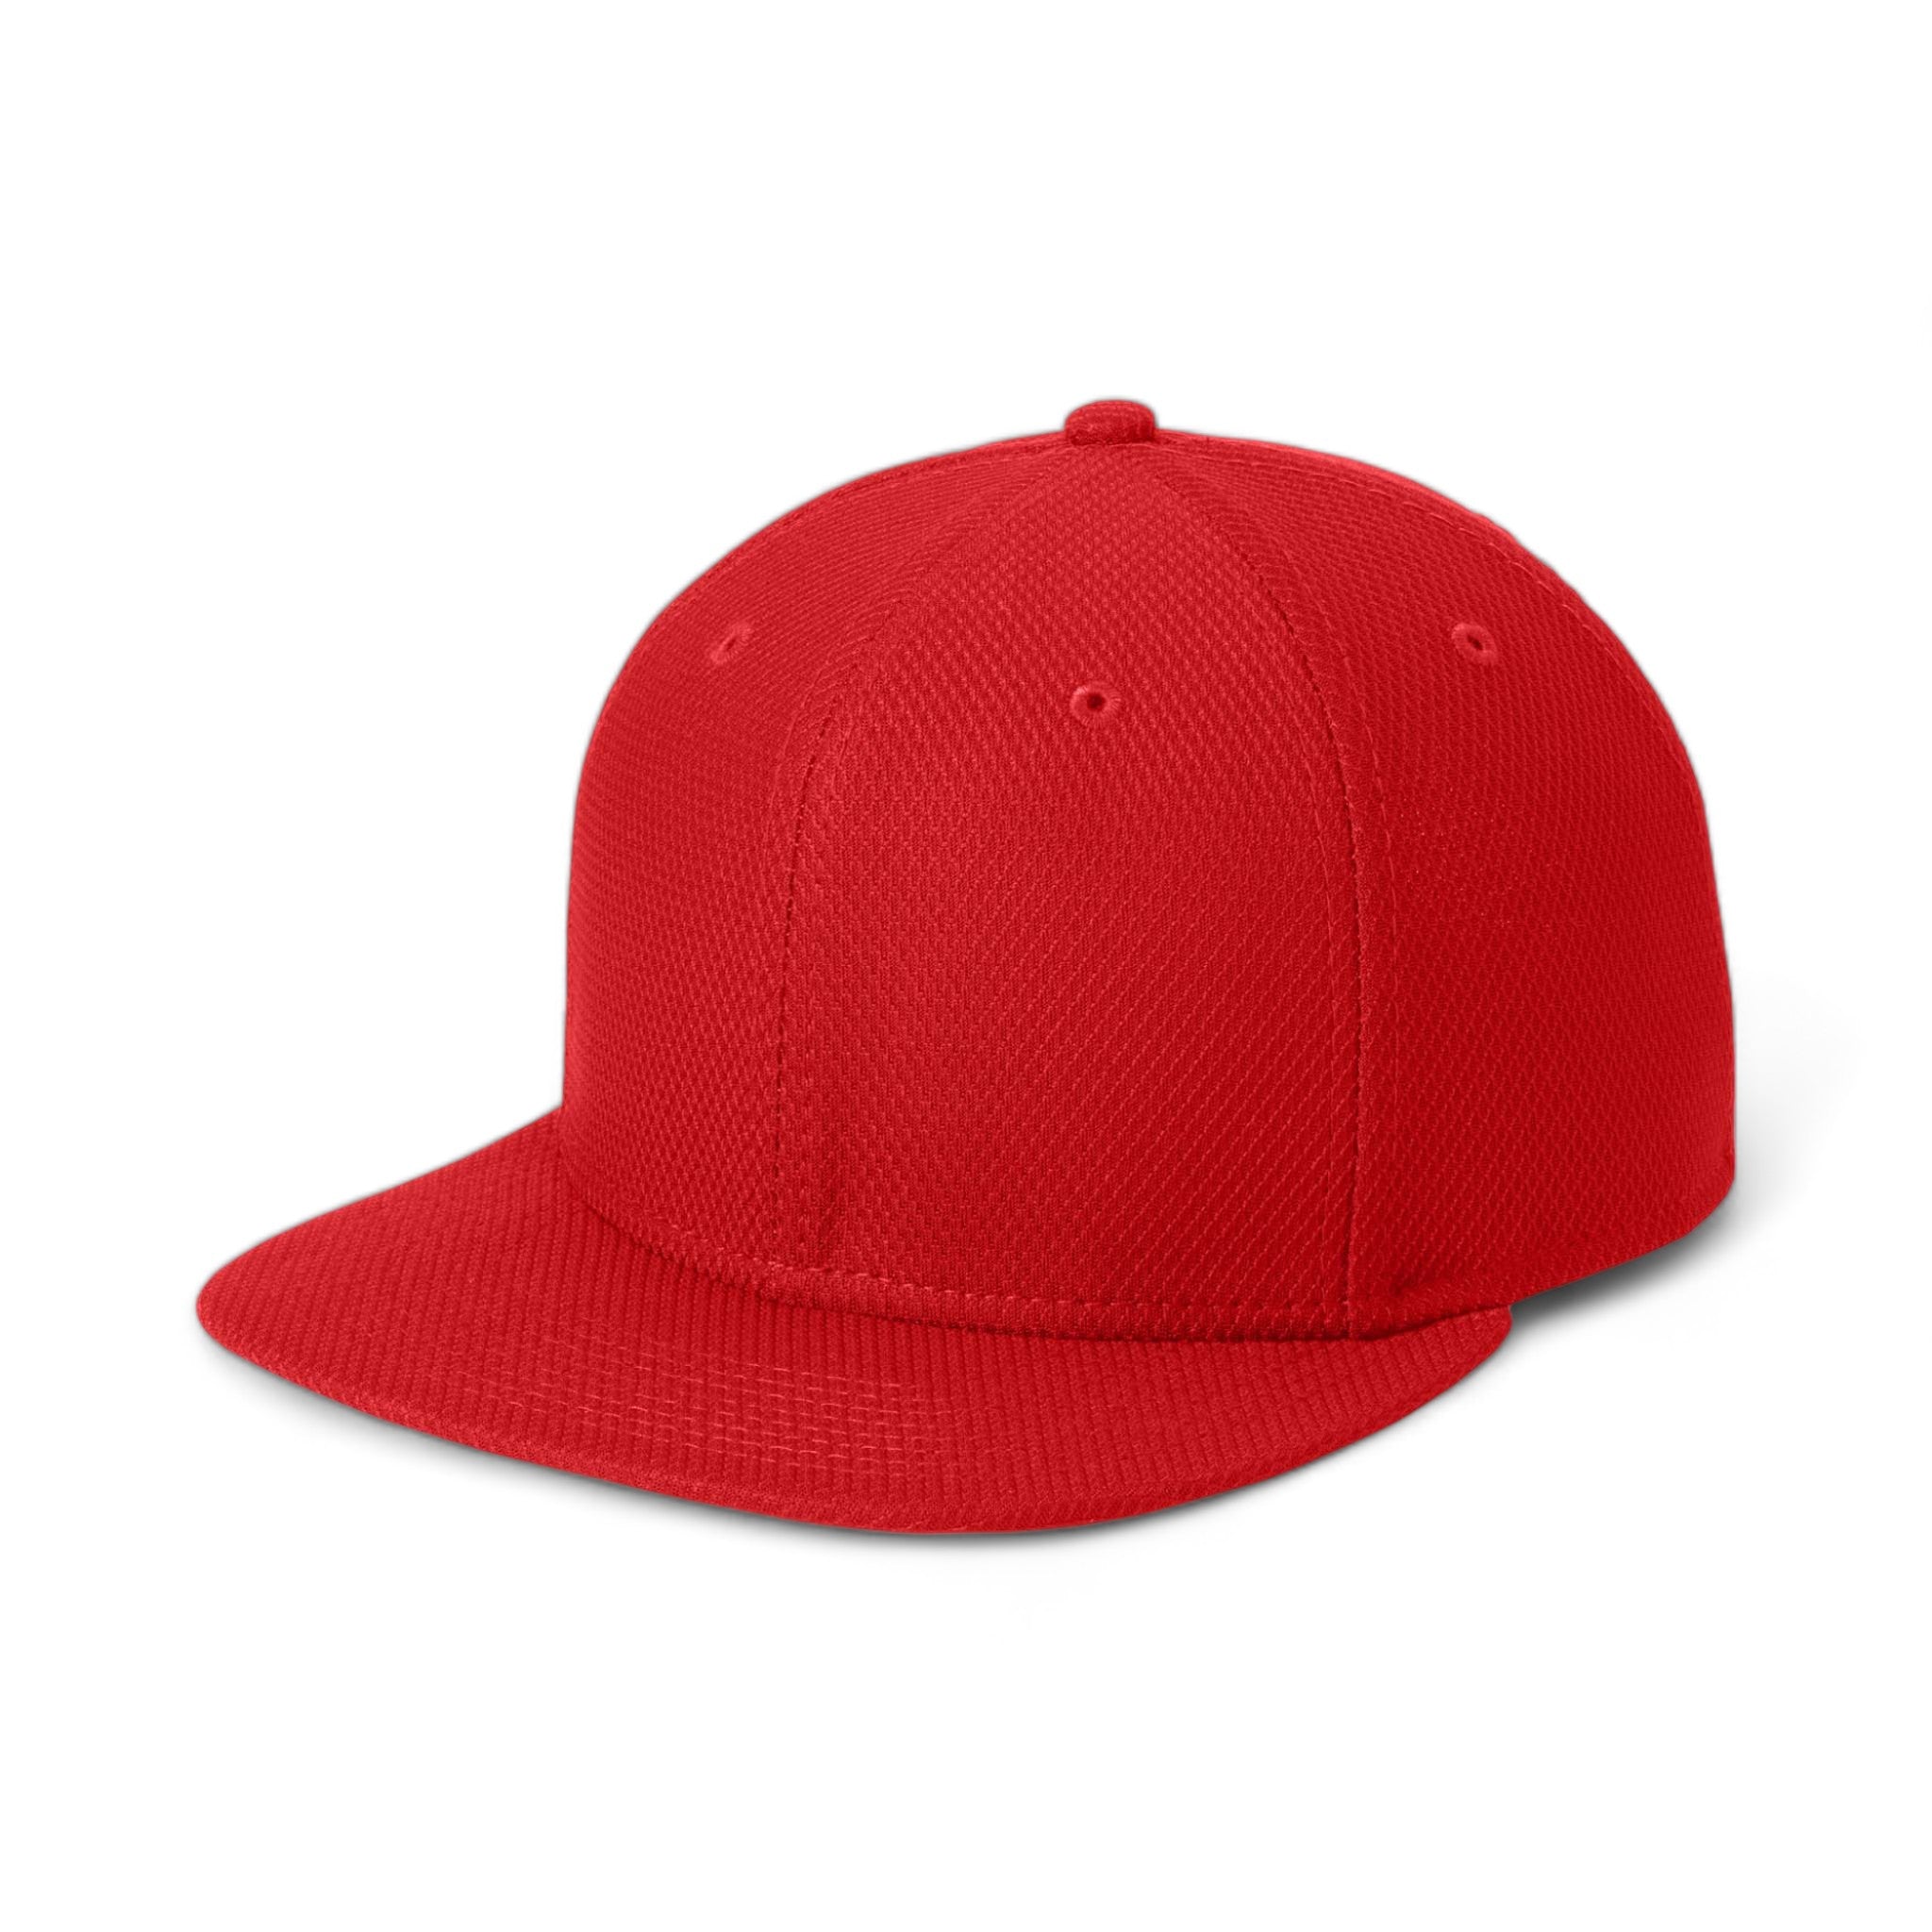 Side view of New Era NE404 custom hat in scarlet